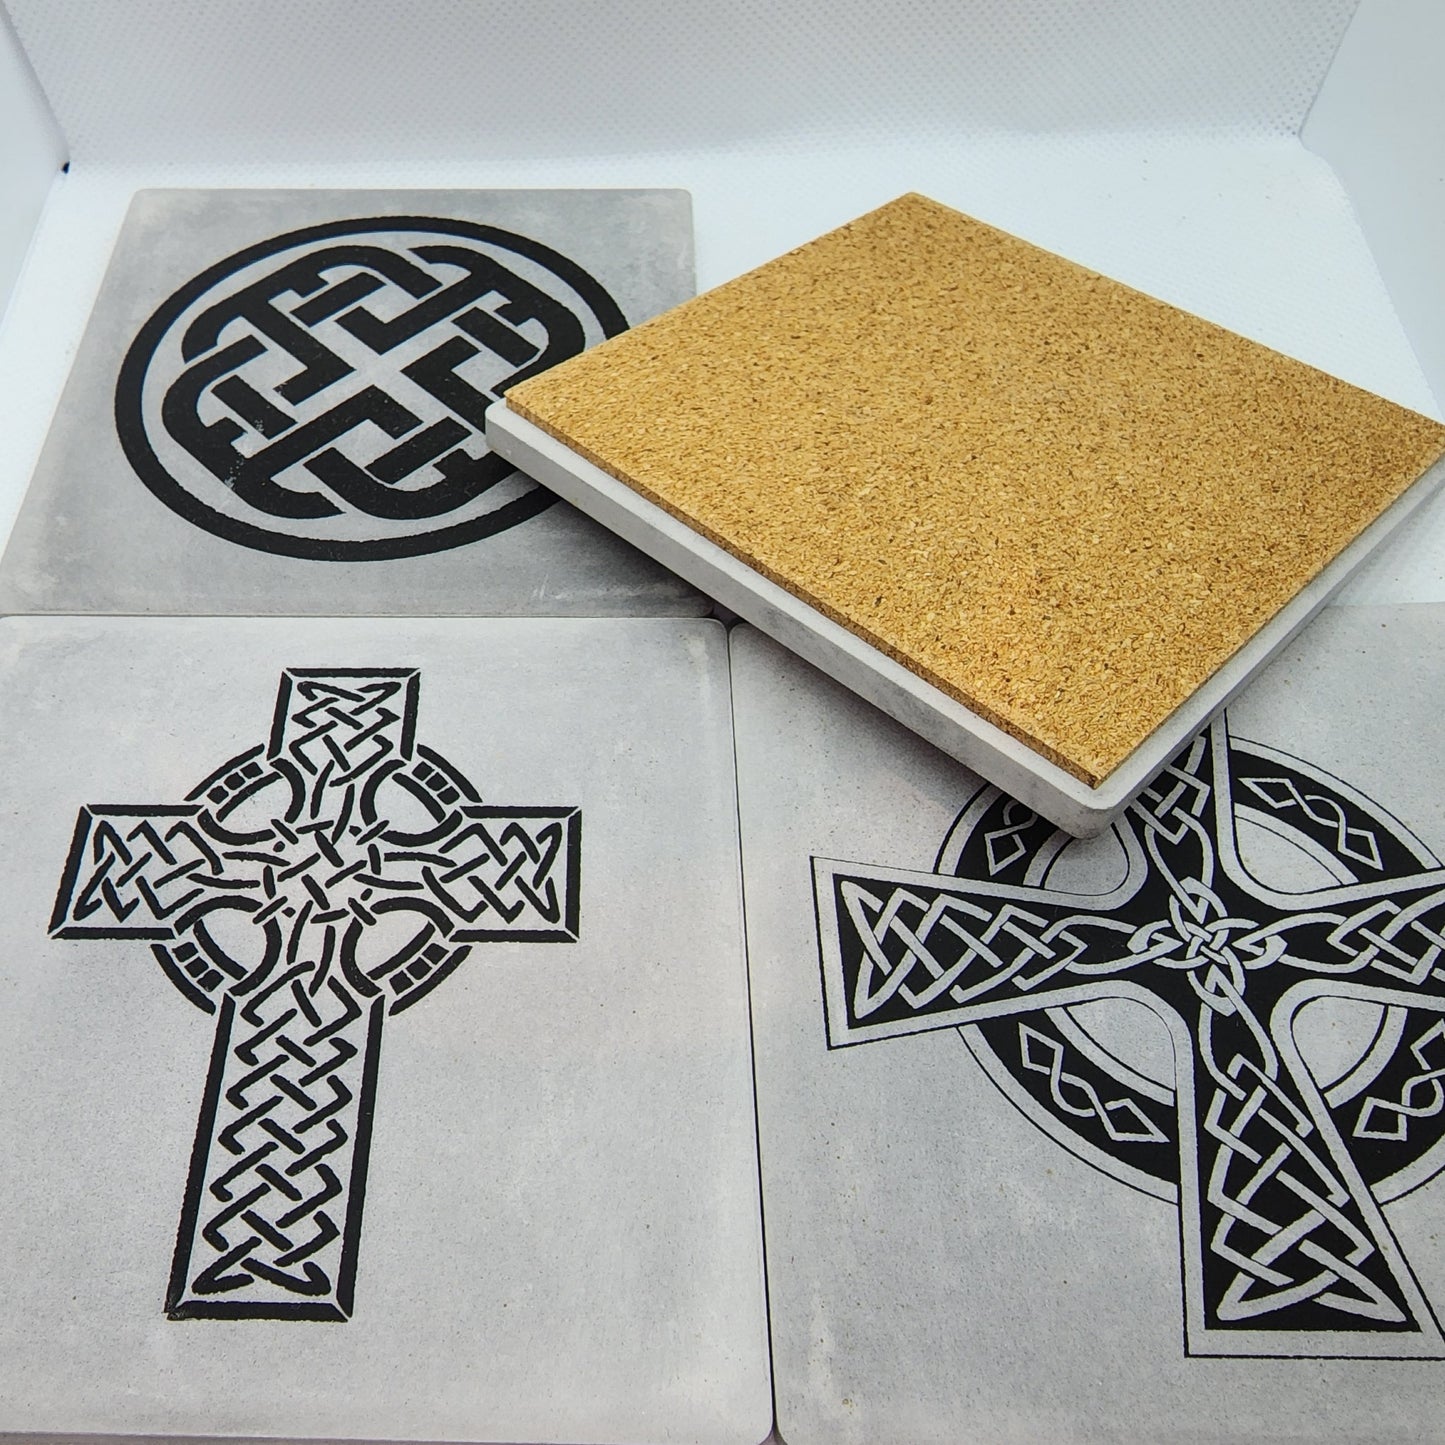 Coaster Set - Celtic Collection